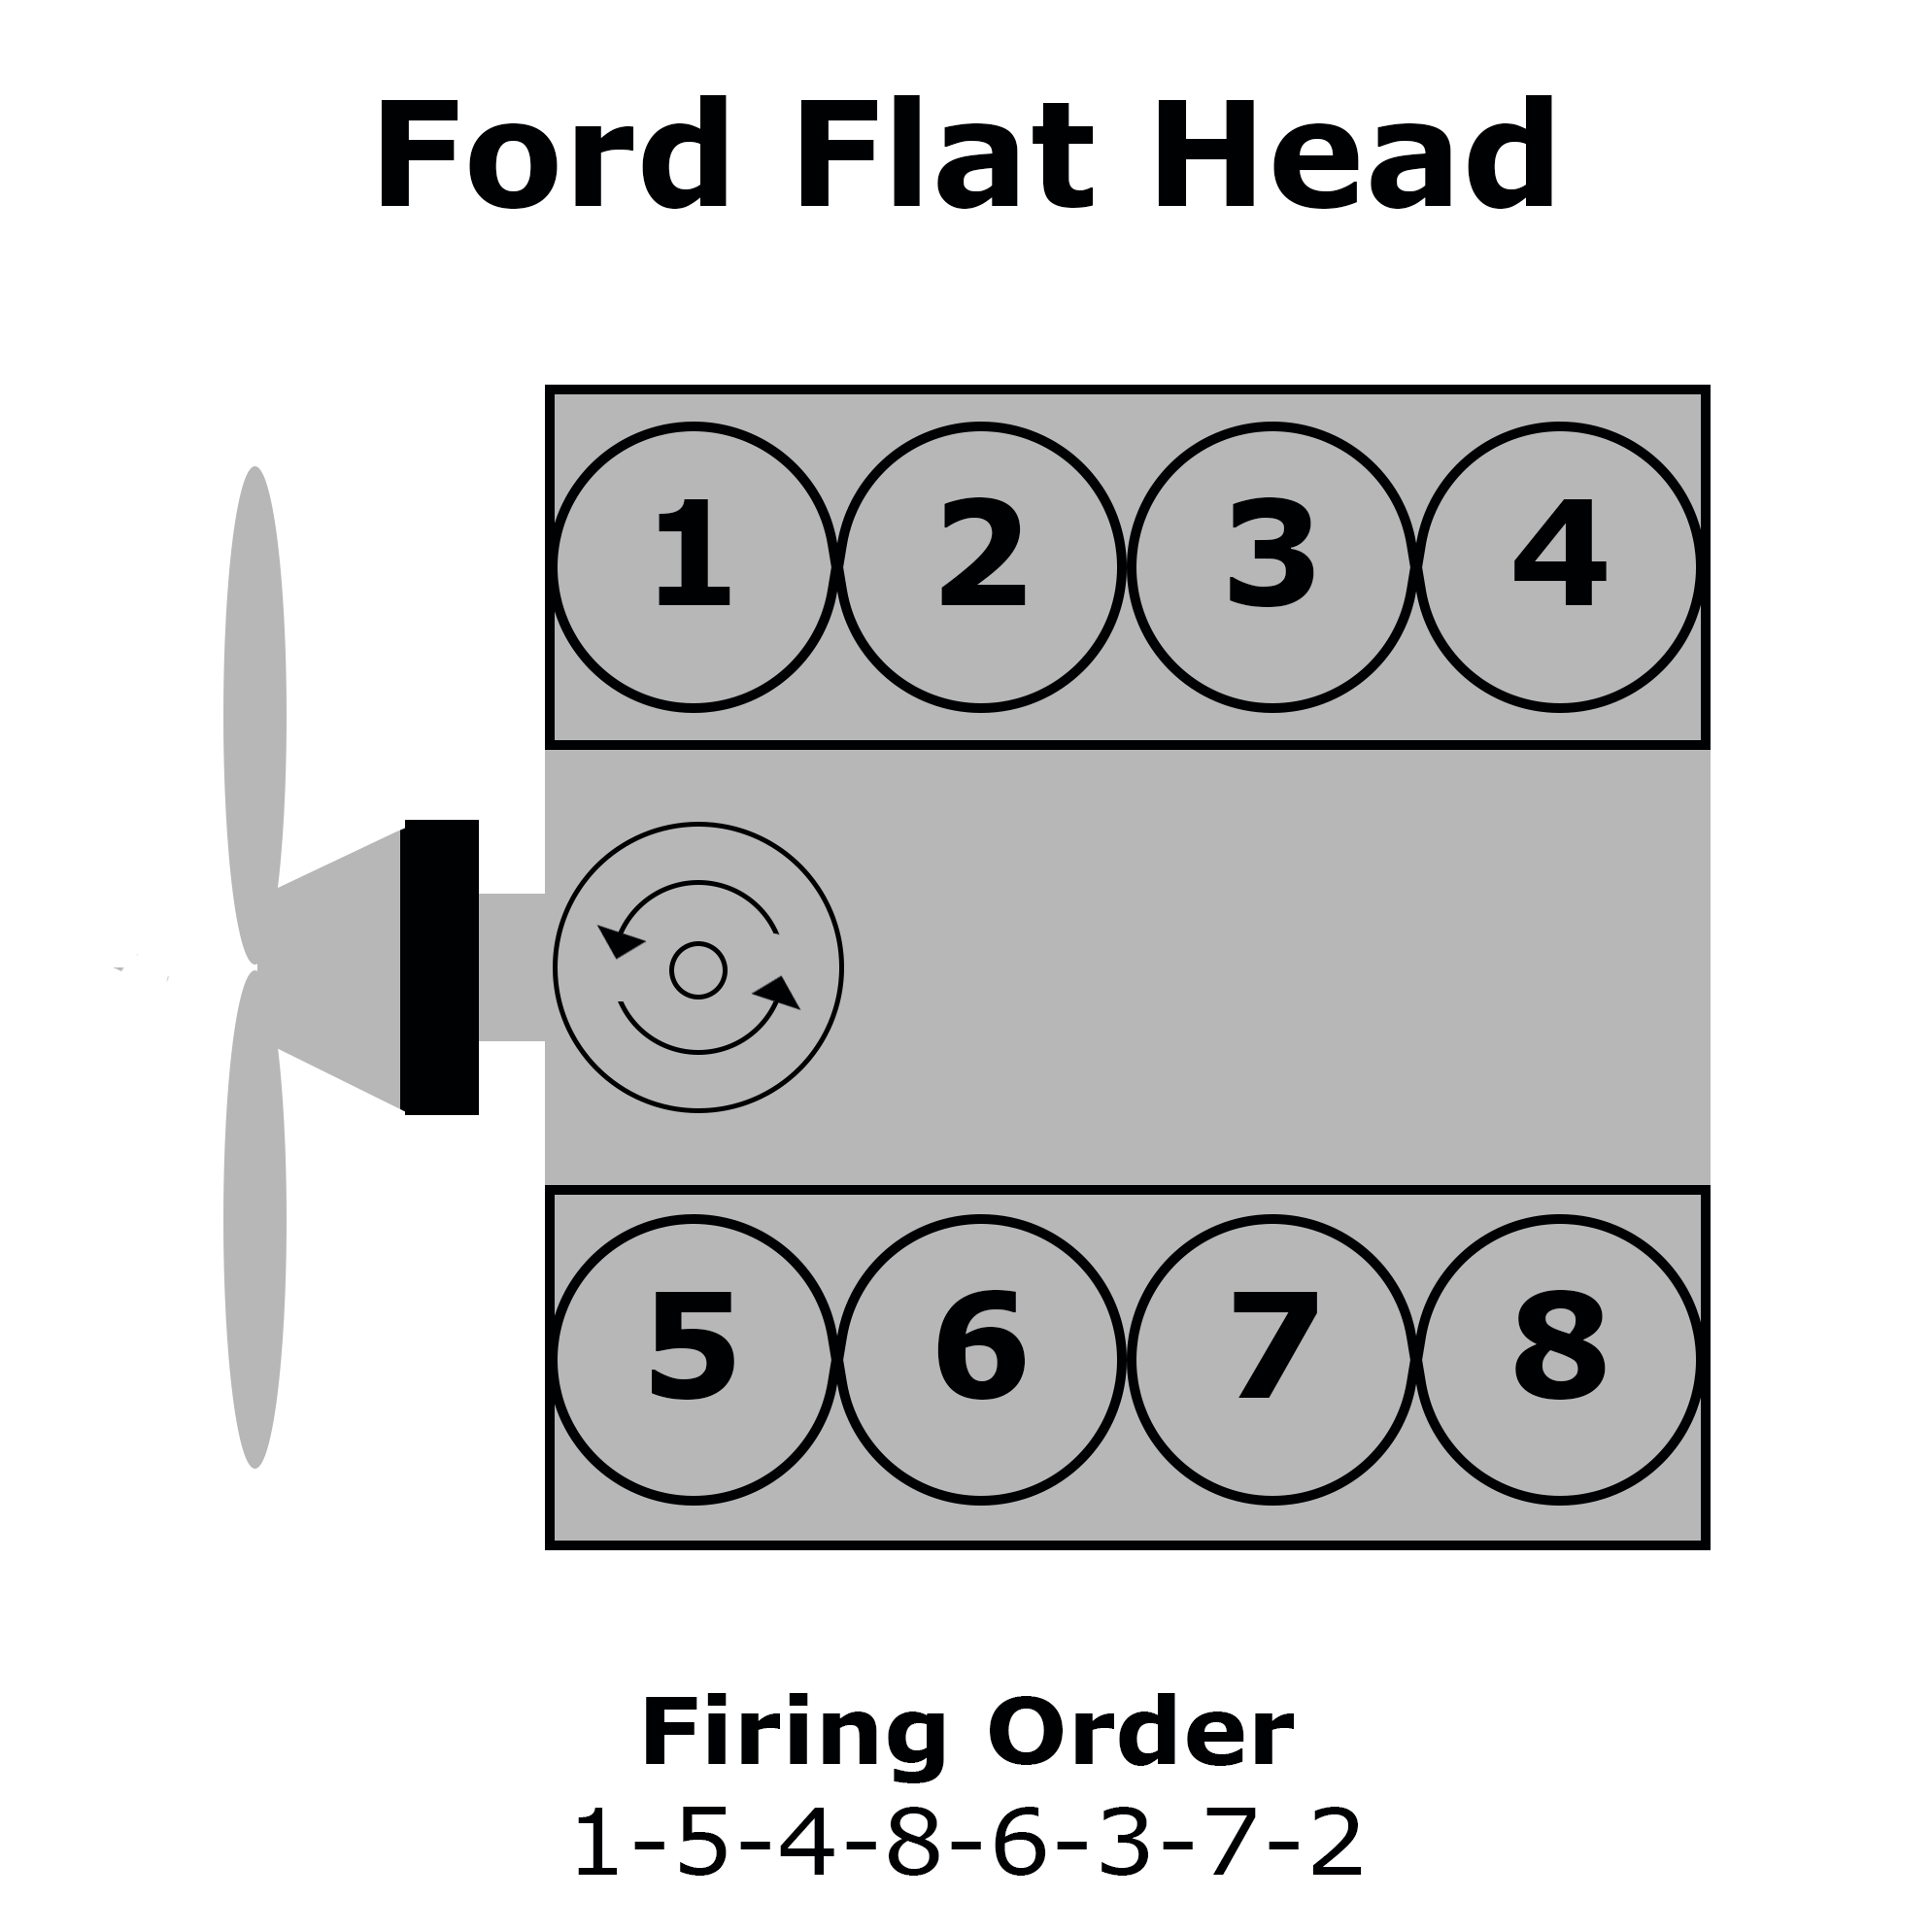 Ford Flat Head Firing Order